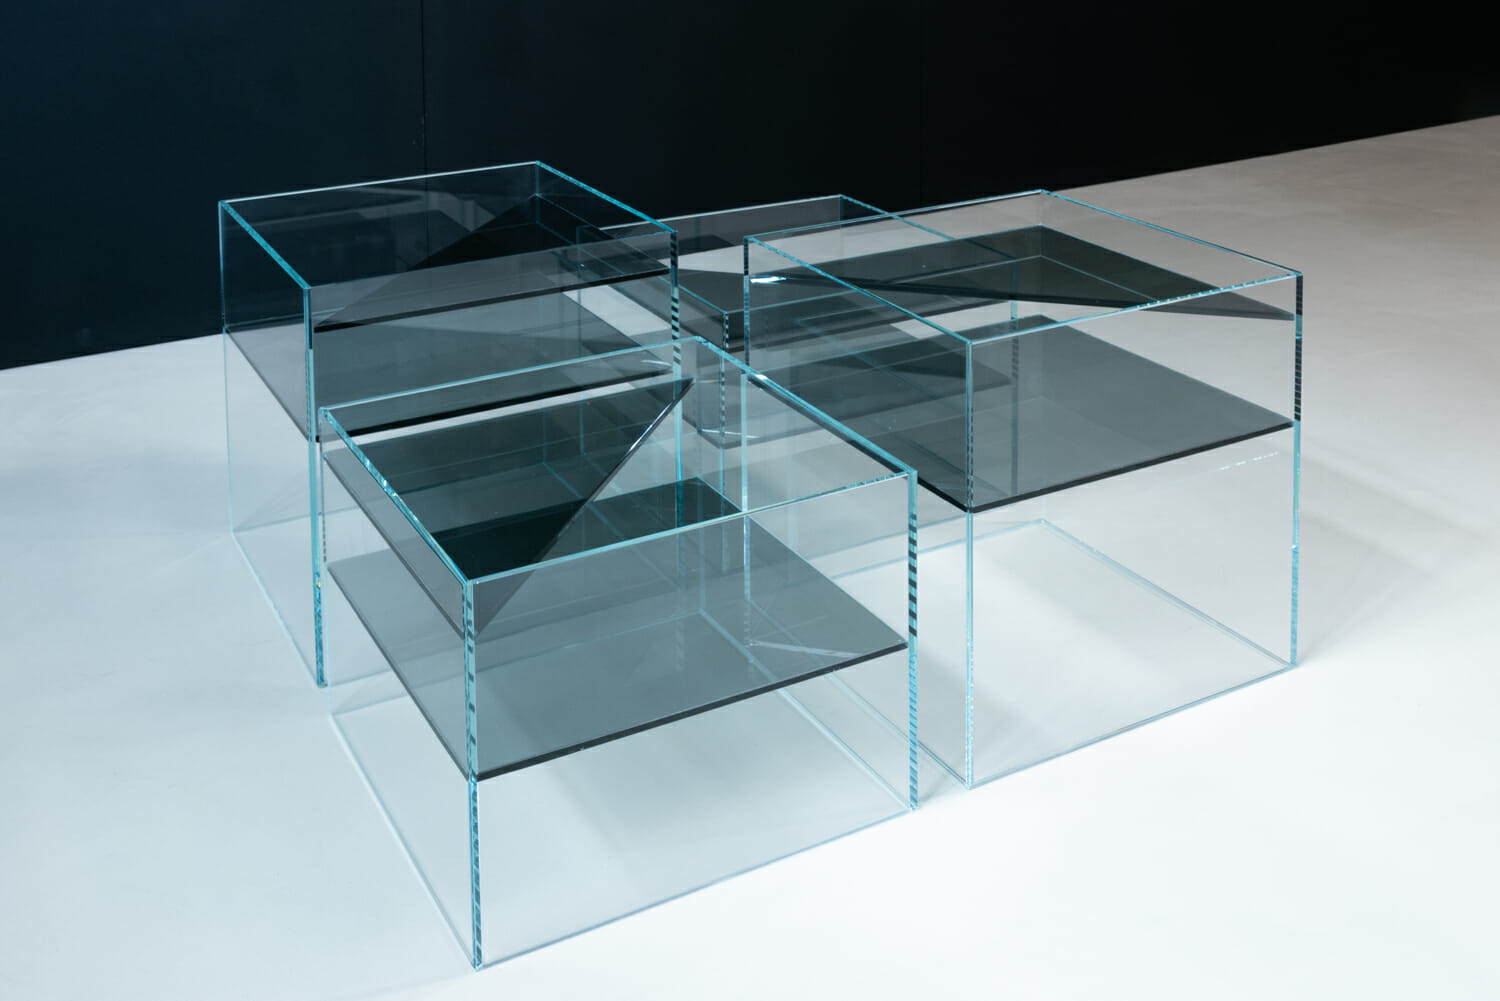 https://www.decorilla.com/online-decorating/wp-content/uploads/2019/05/high-end-glass-furniture-OONIKO-direction.jpg